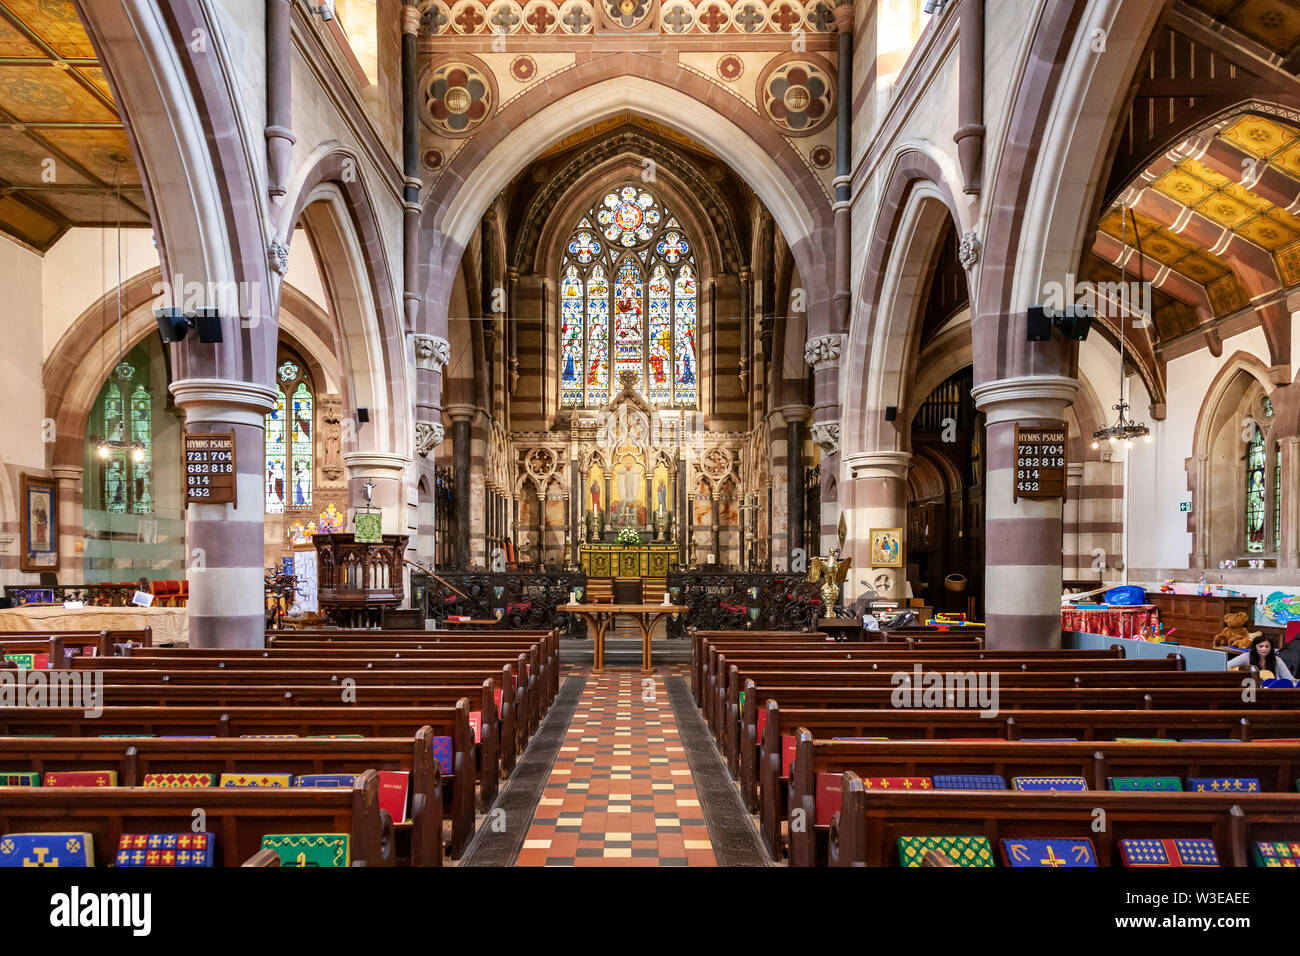 Interia of St Andrew's, The Parish Church of Rugby, Warwickshire, UK Stock Photo